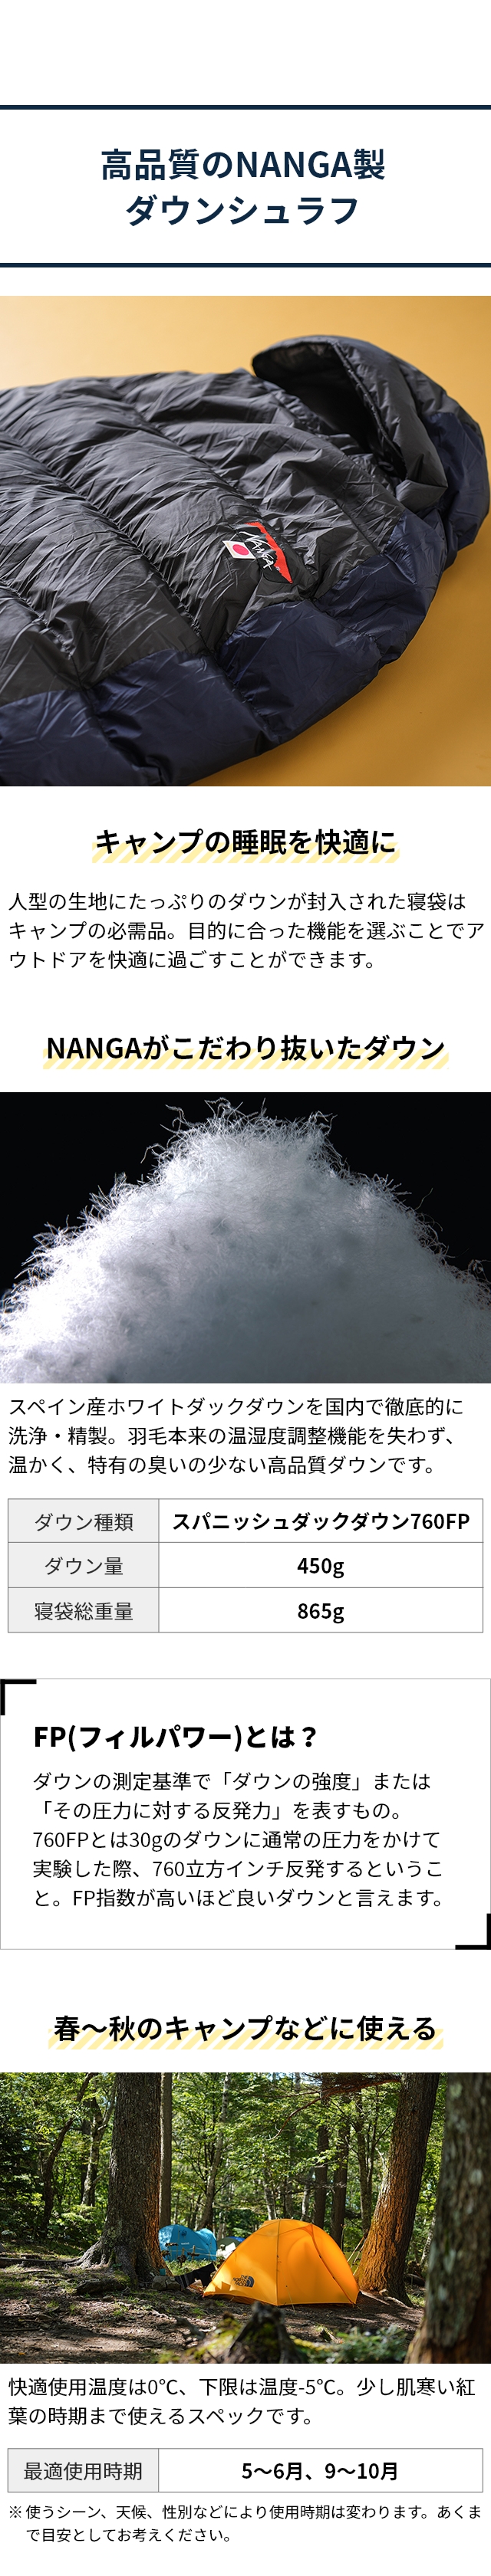 NANGA(ナンガ) オーロラライト(AURORA LIGHT) 450DX